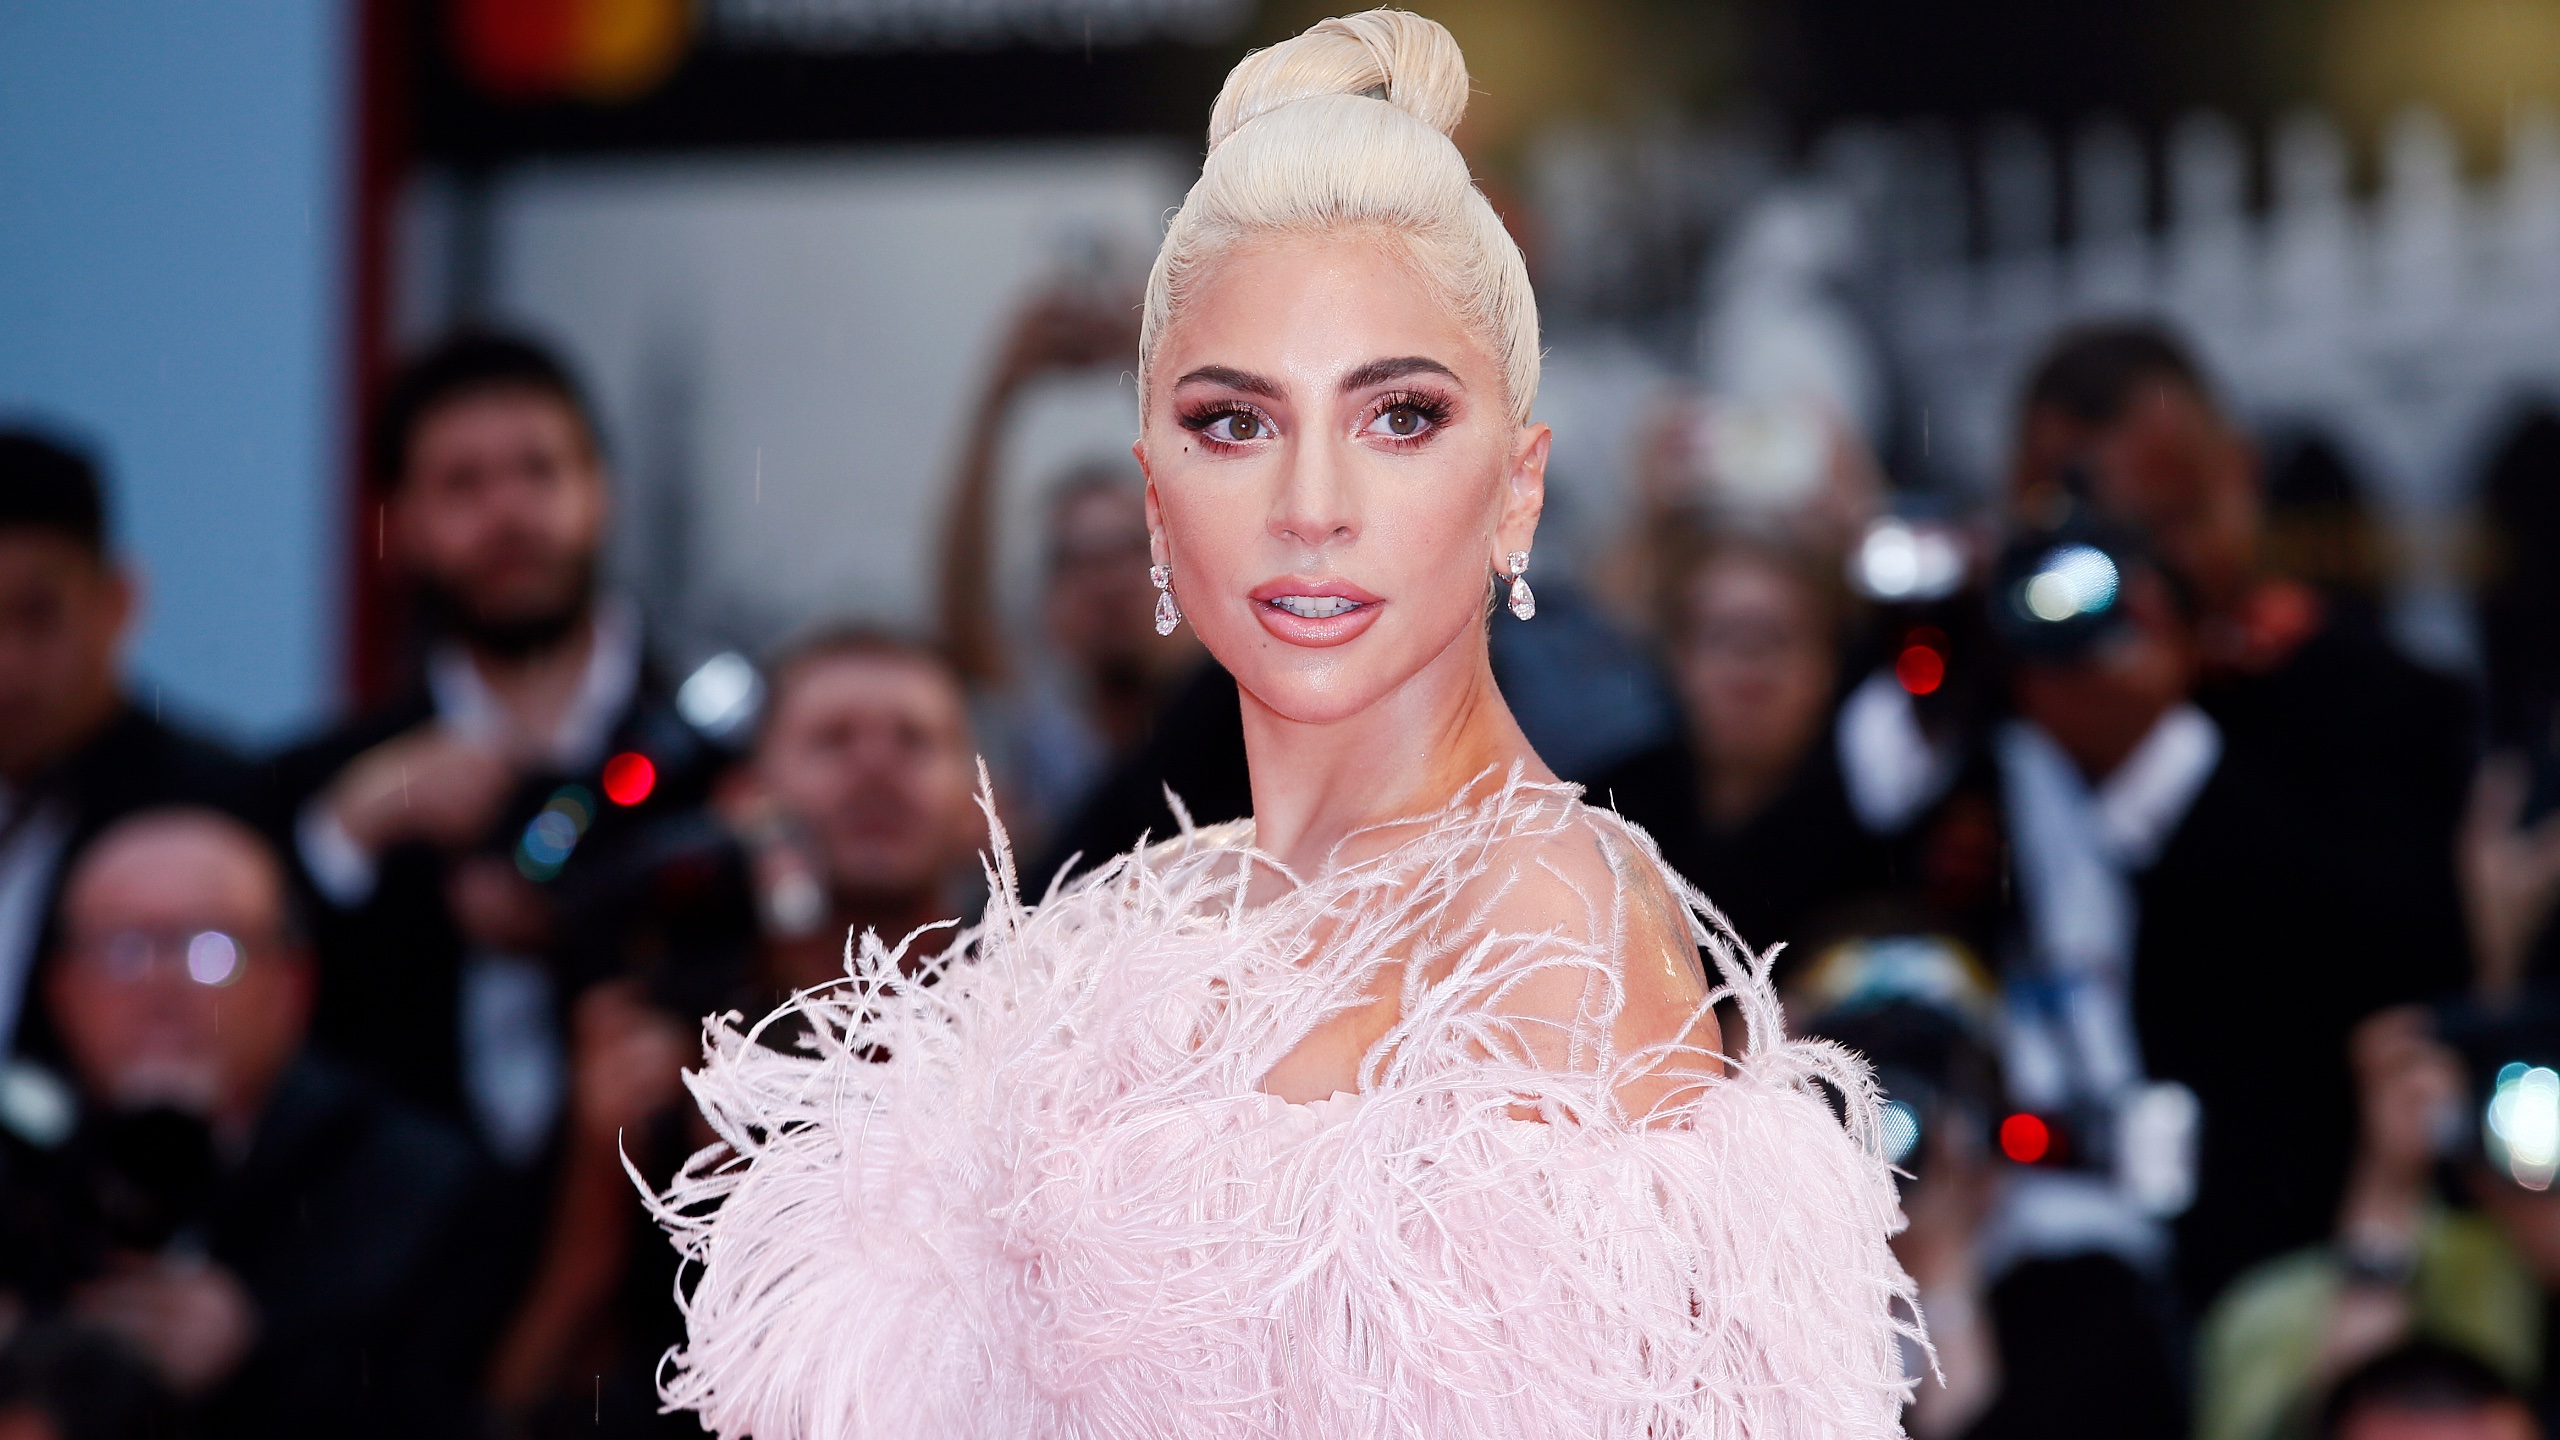 Lady Gaga Headlines Music Festival in Fortnite Metaverse